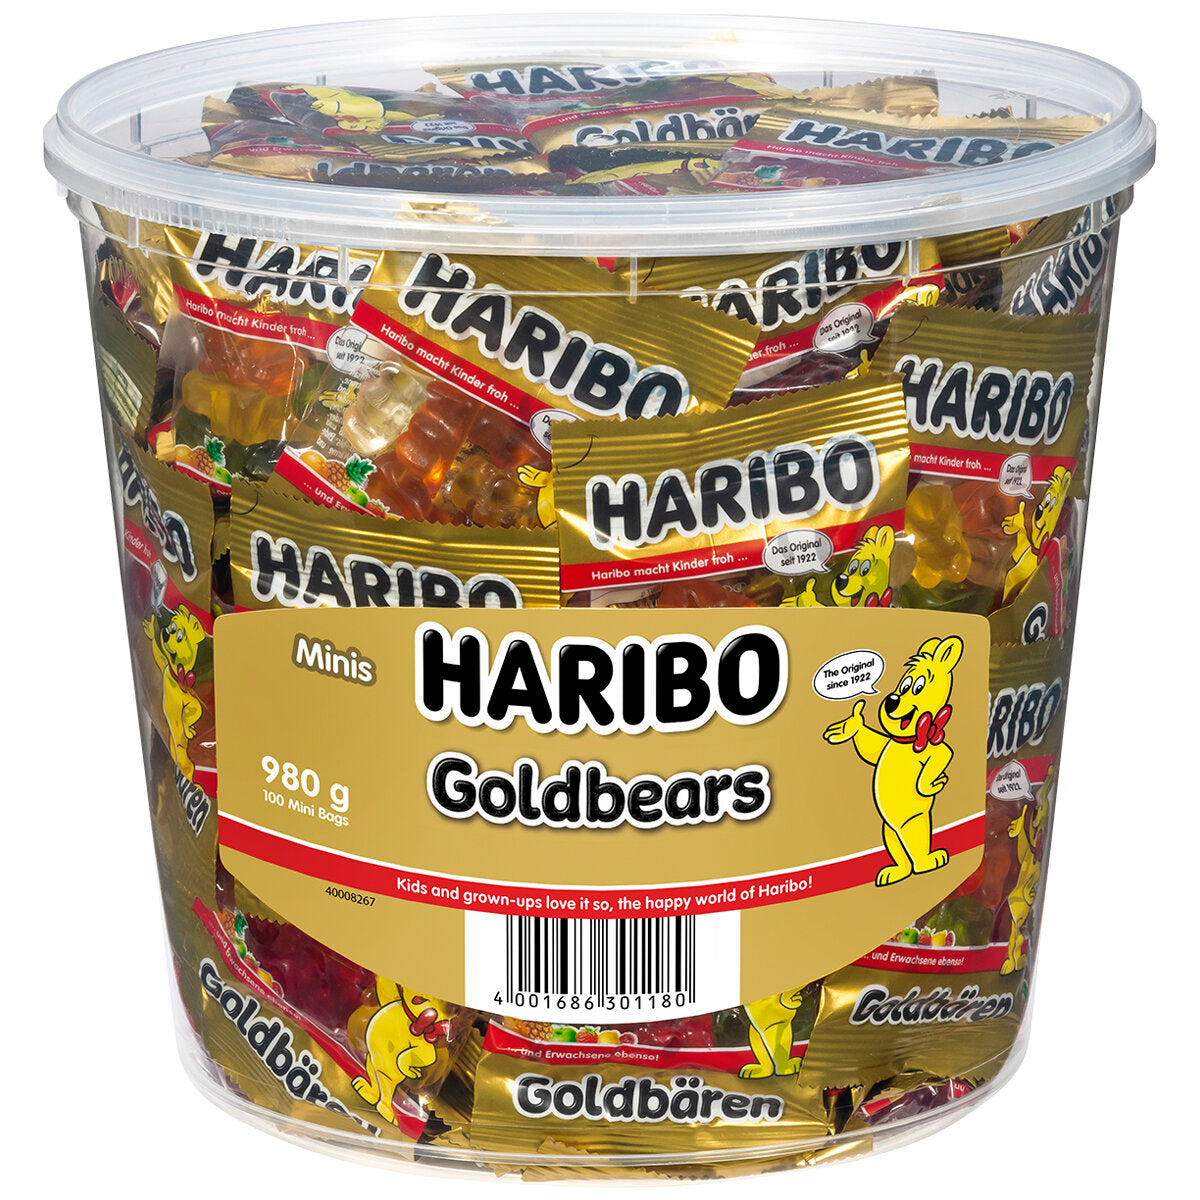 Haribo Goldbears 100 minibags tub 980g